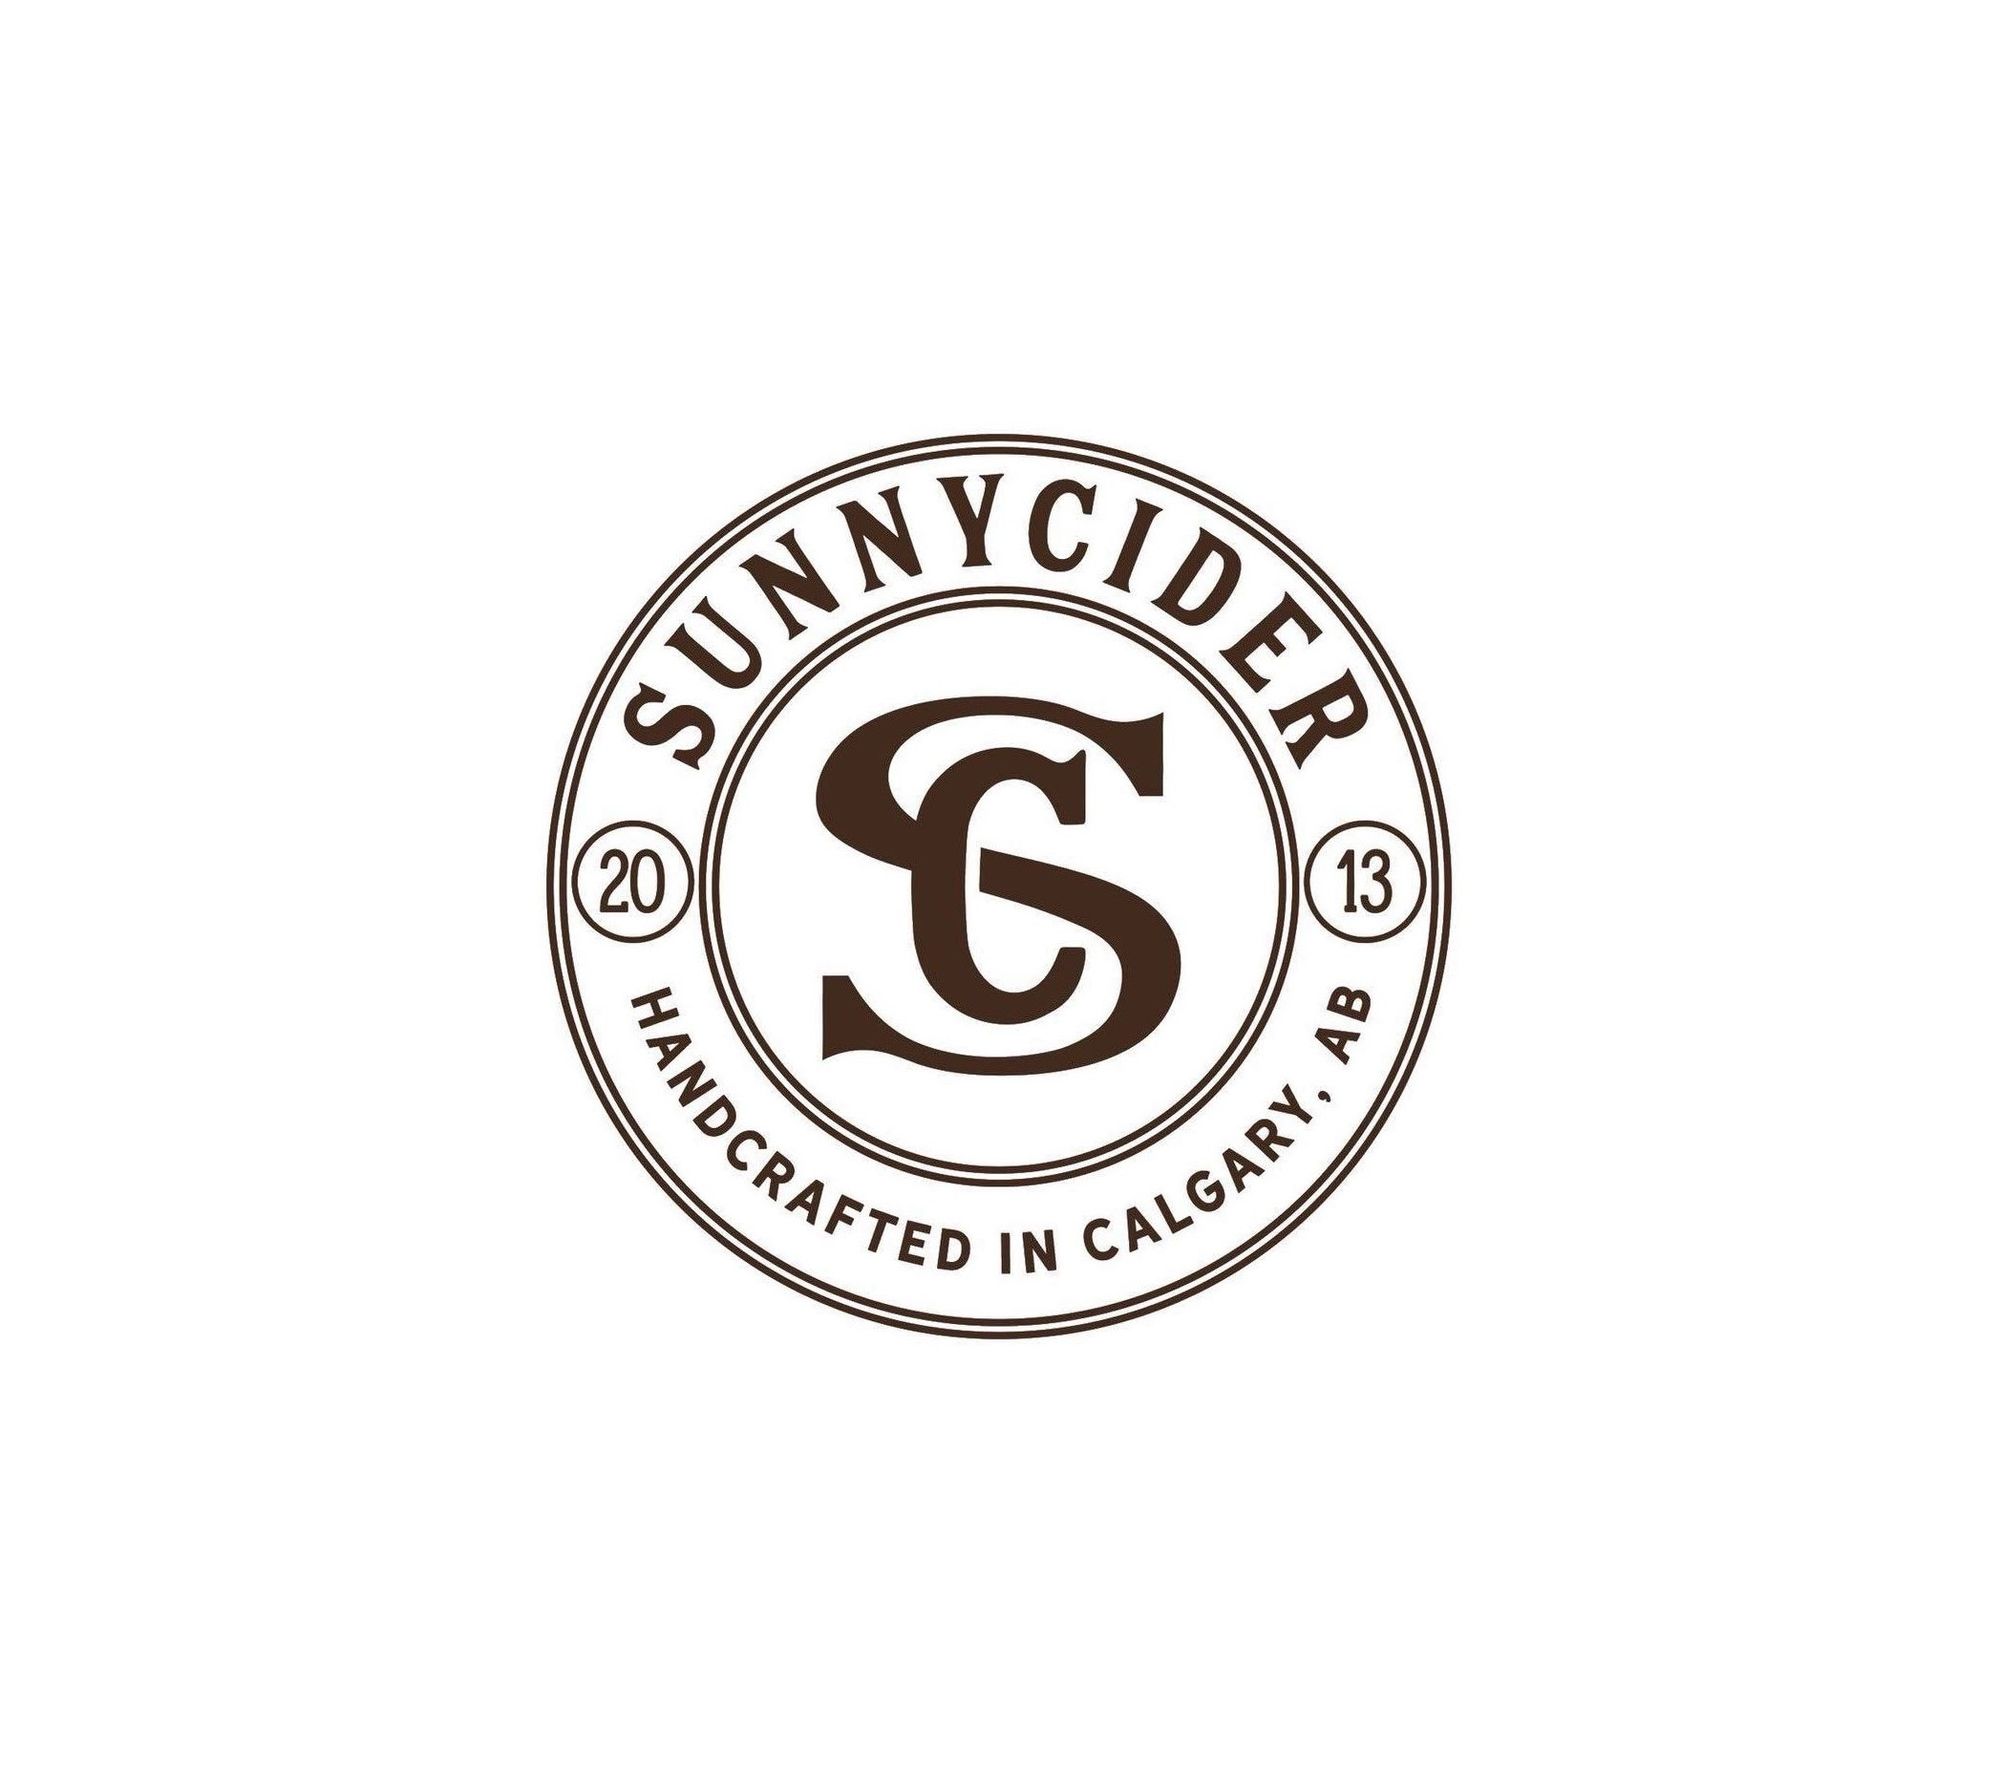 Premium Handcrafted Hard Cider - SunnyCider